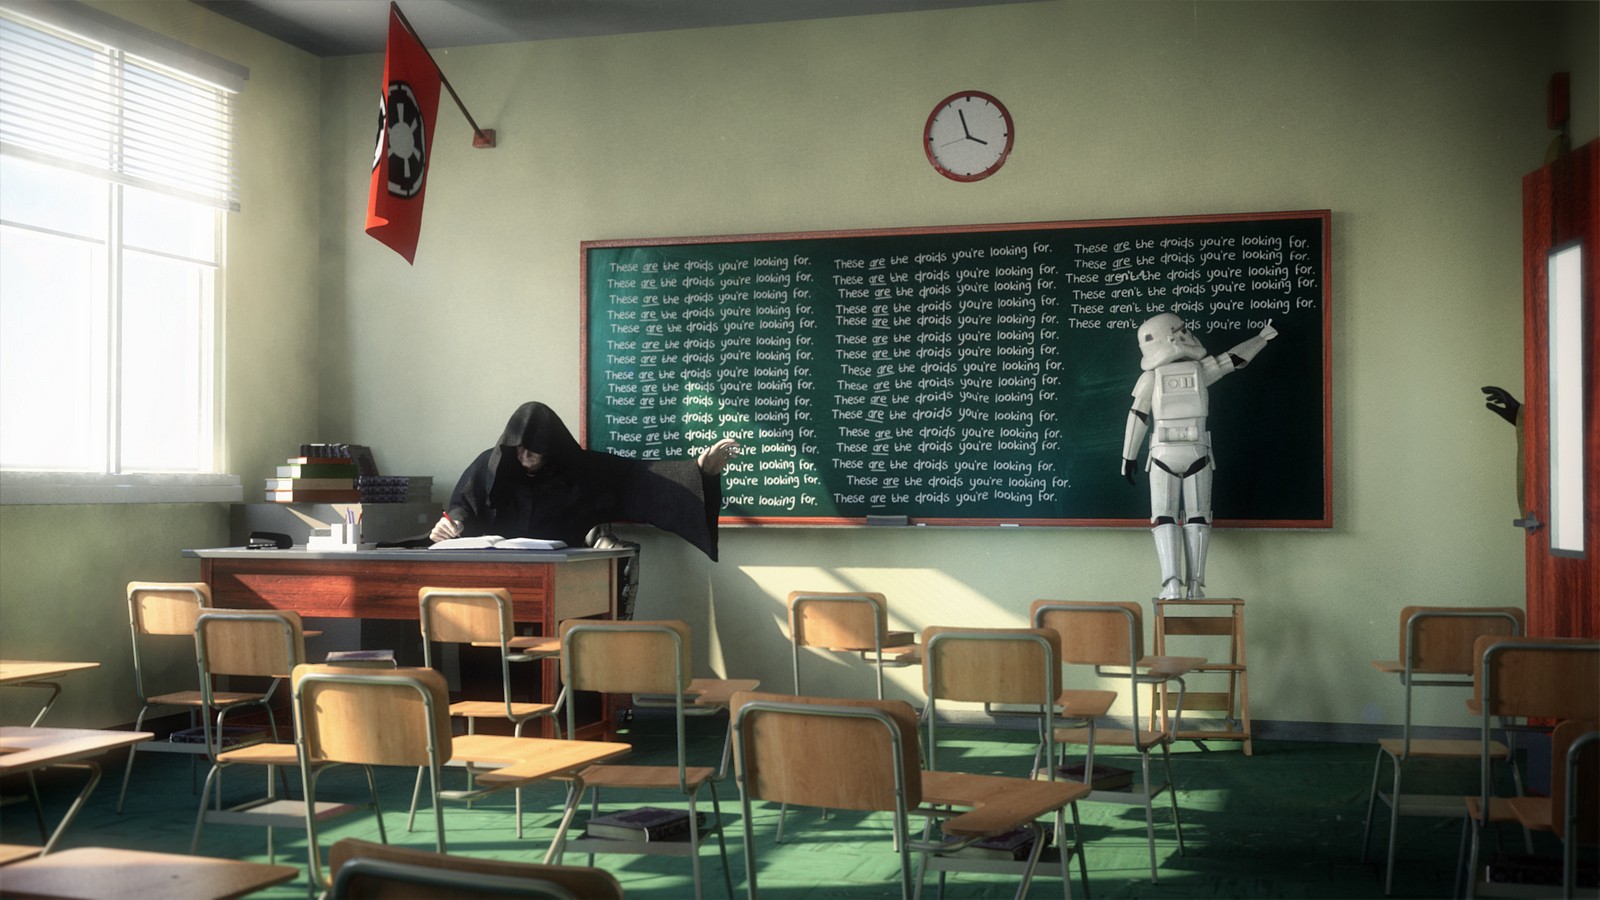 sith (star wars), stormtrooper, humor, star wars, classroom, emperor palpatine, school